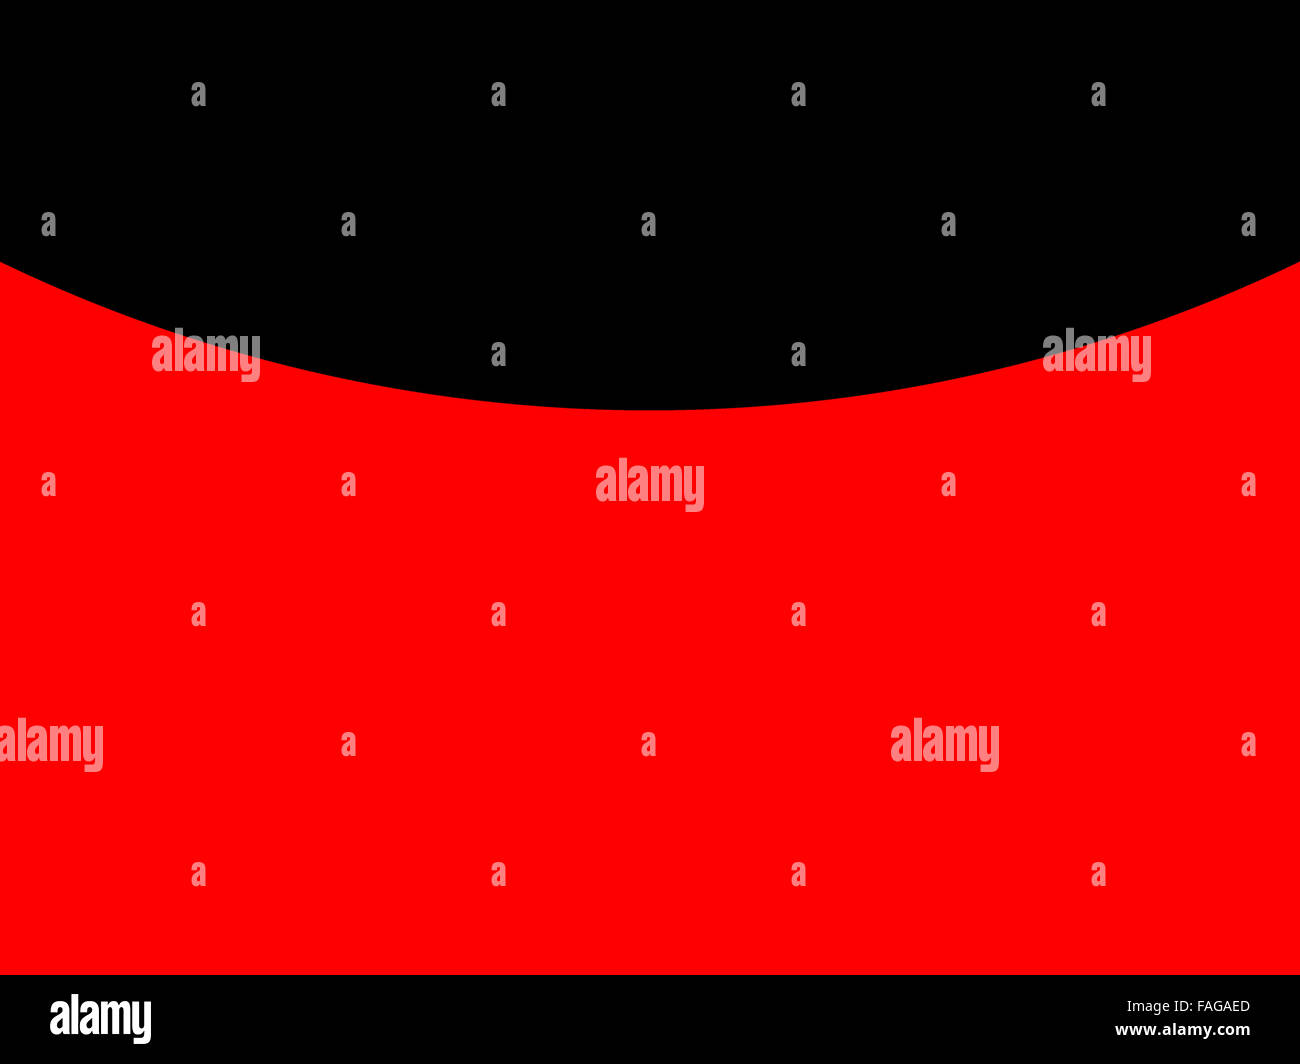 Abstrakt rot-schwarzen Hintergrund Präsentationsfläche Stockfoto